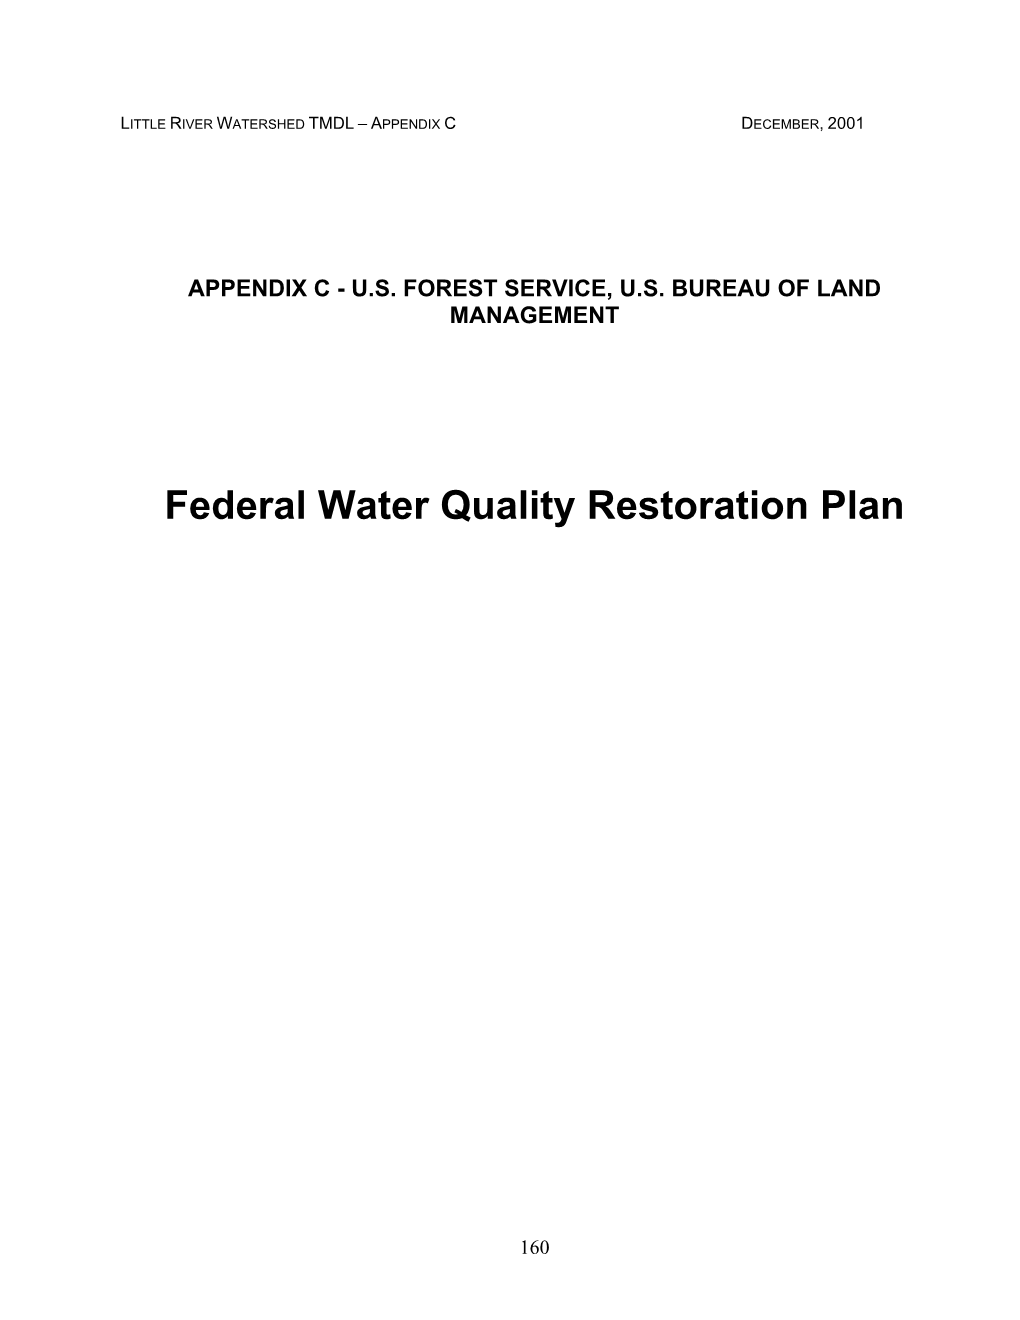 Federal Water Quality Restoration Plan